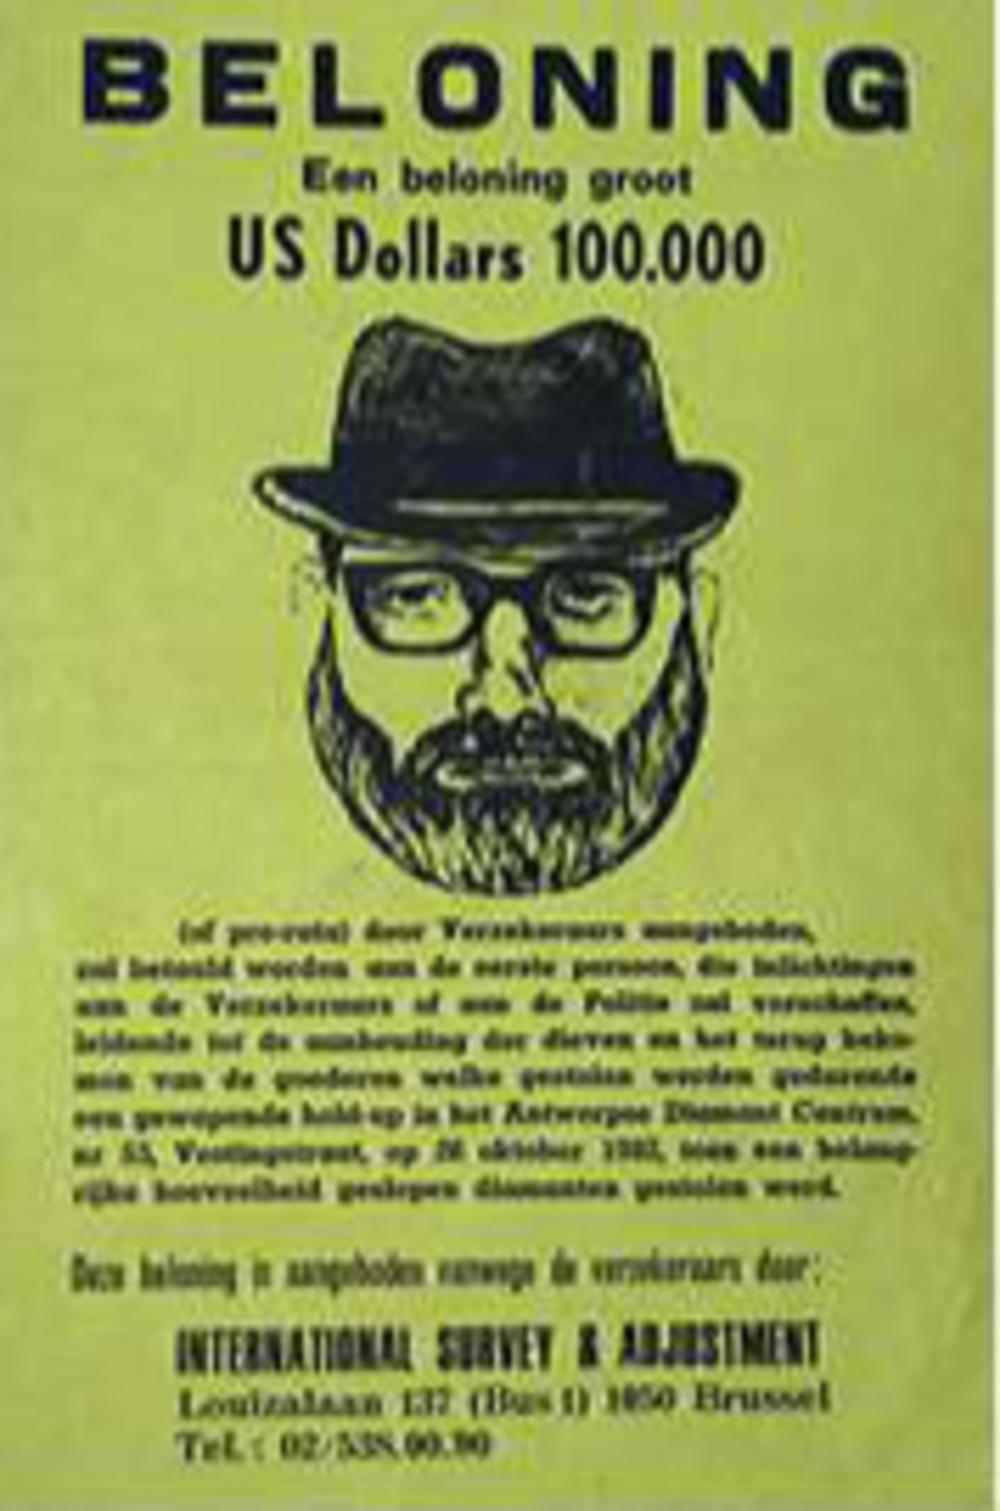 Affiche met opsporingsbericht, 1982.